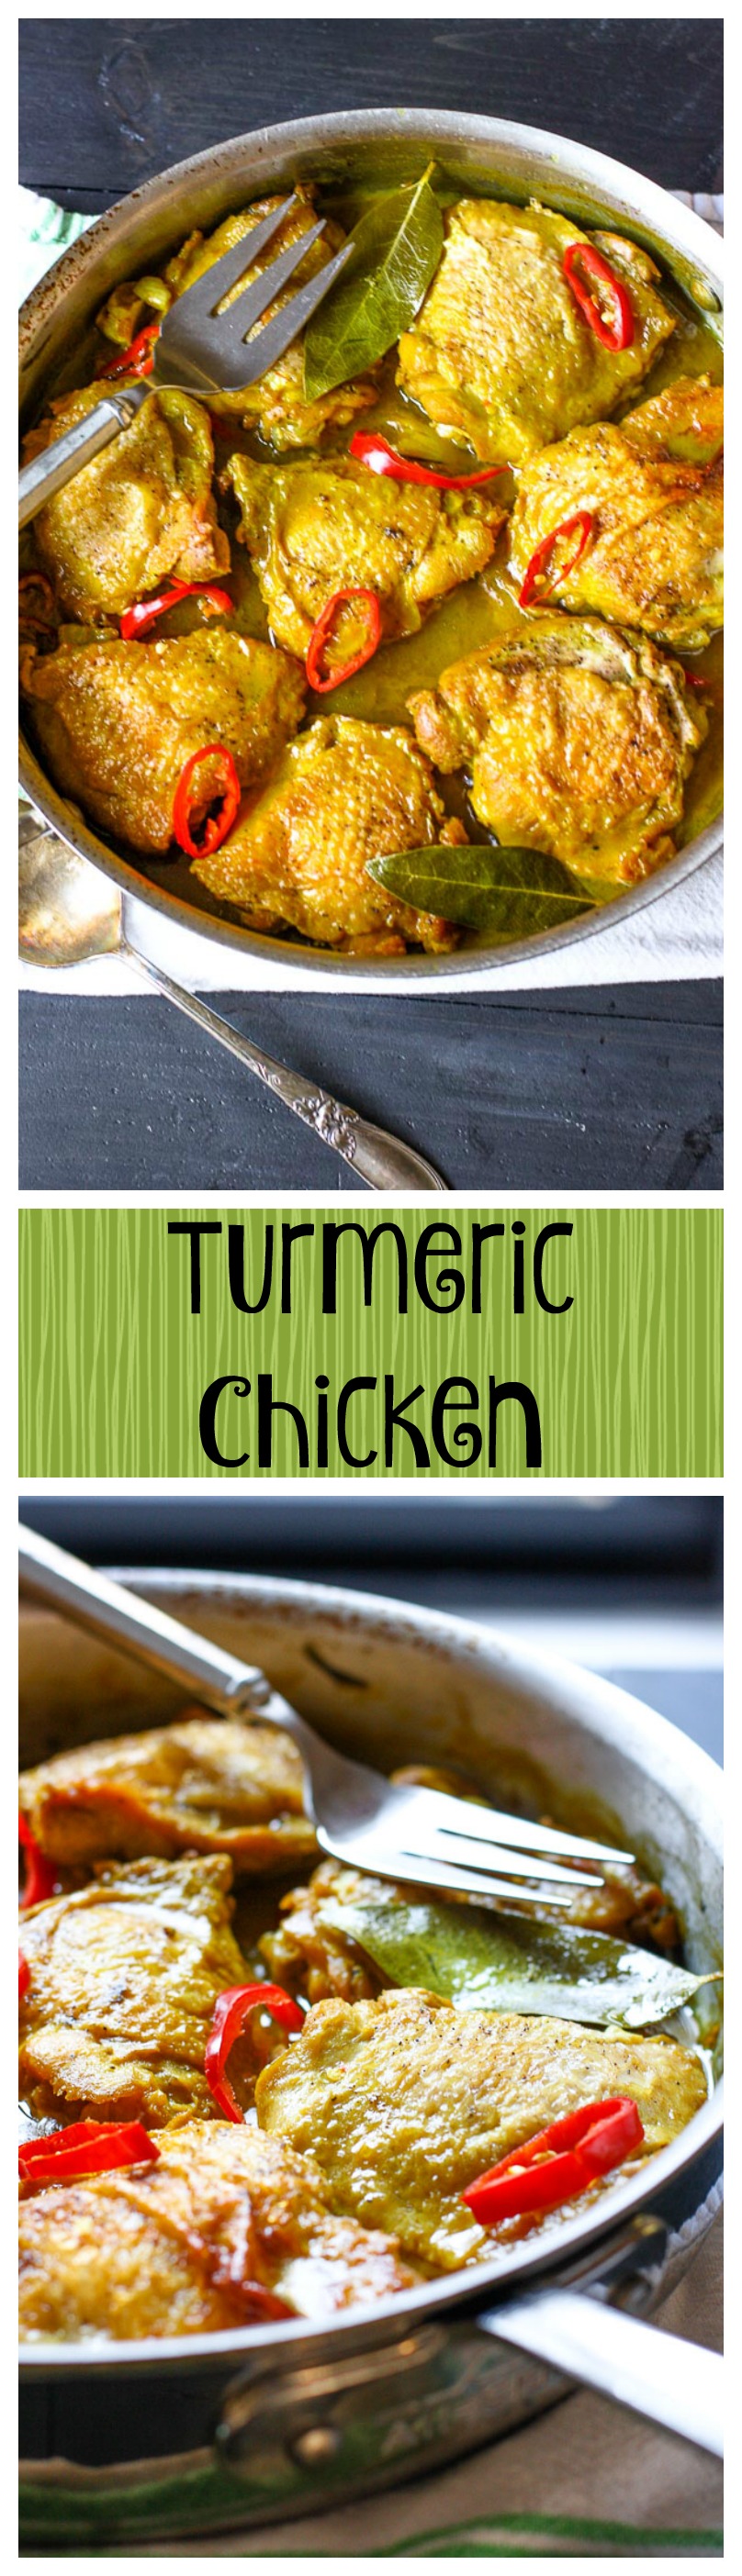 turmeric chicken